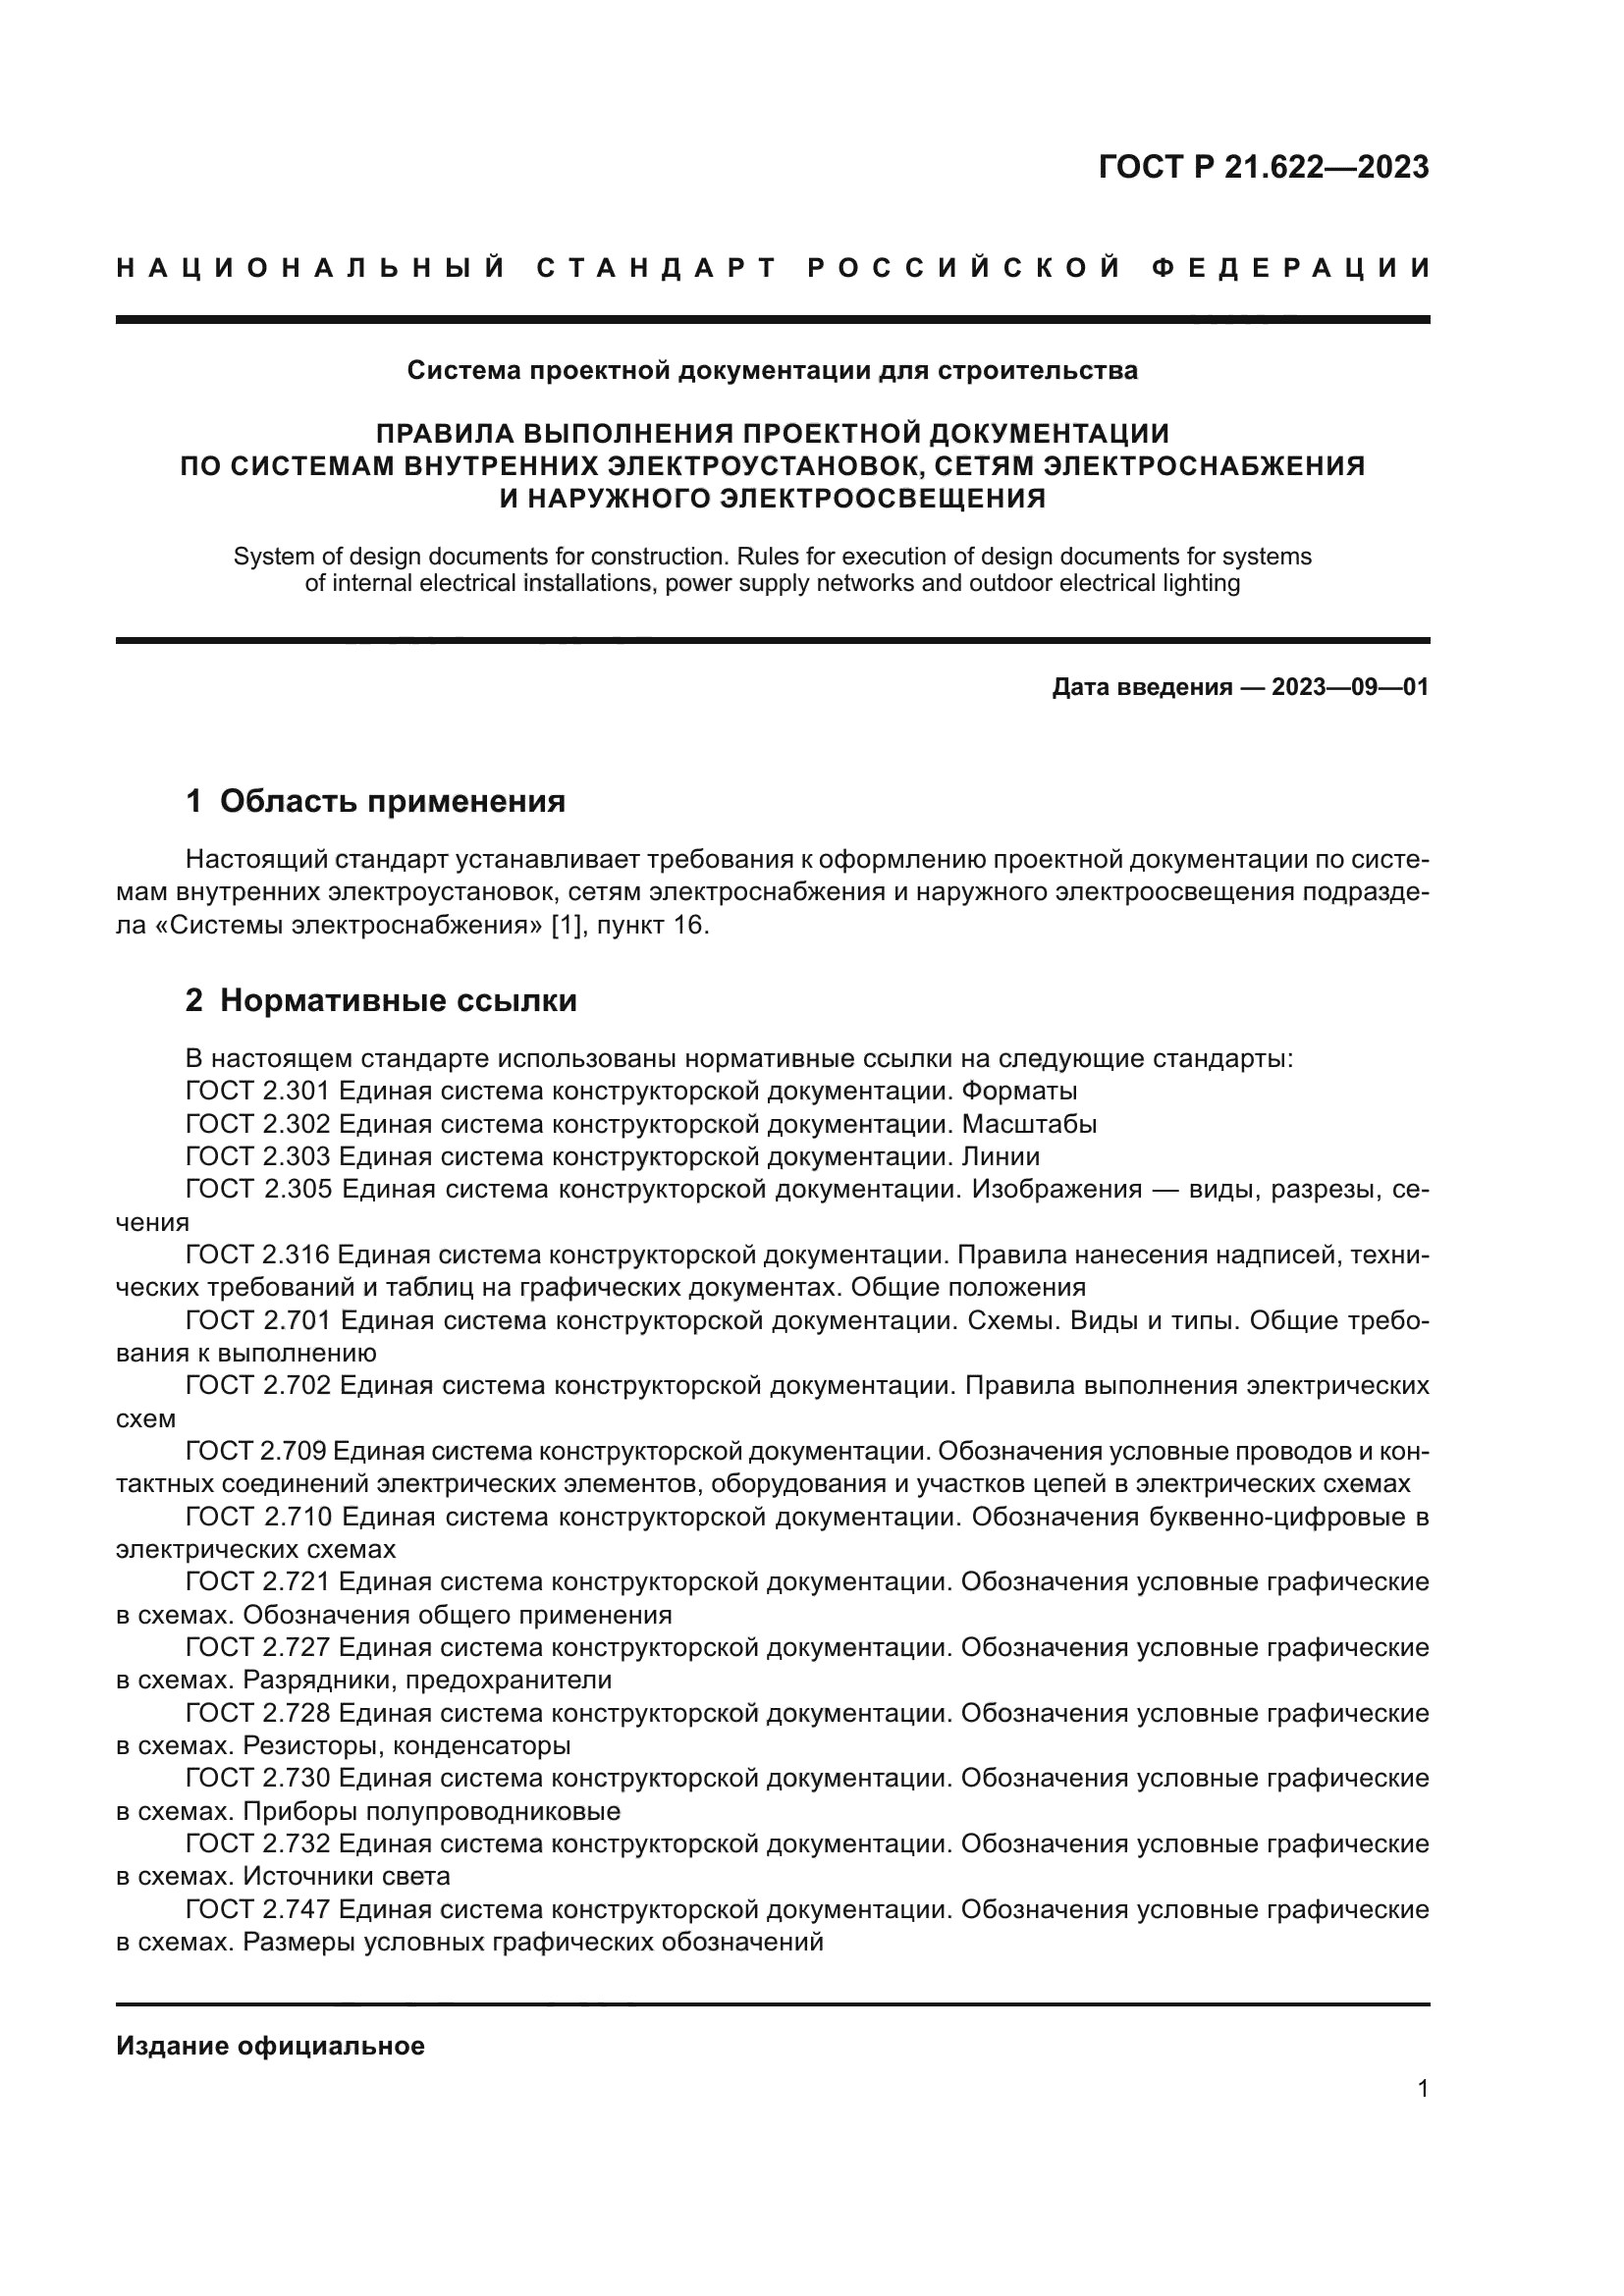 ГОСТ Р 21.622-2023